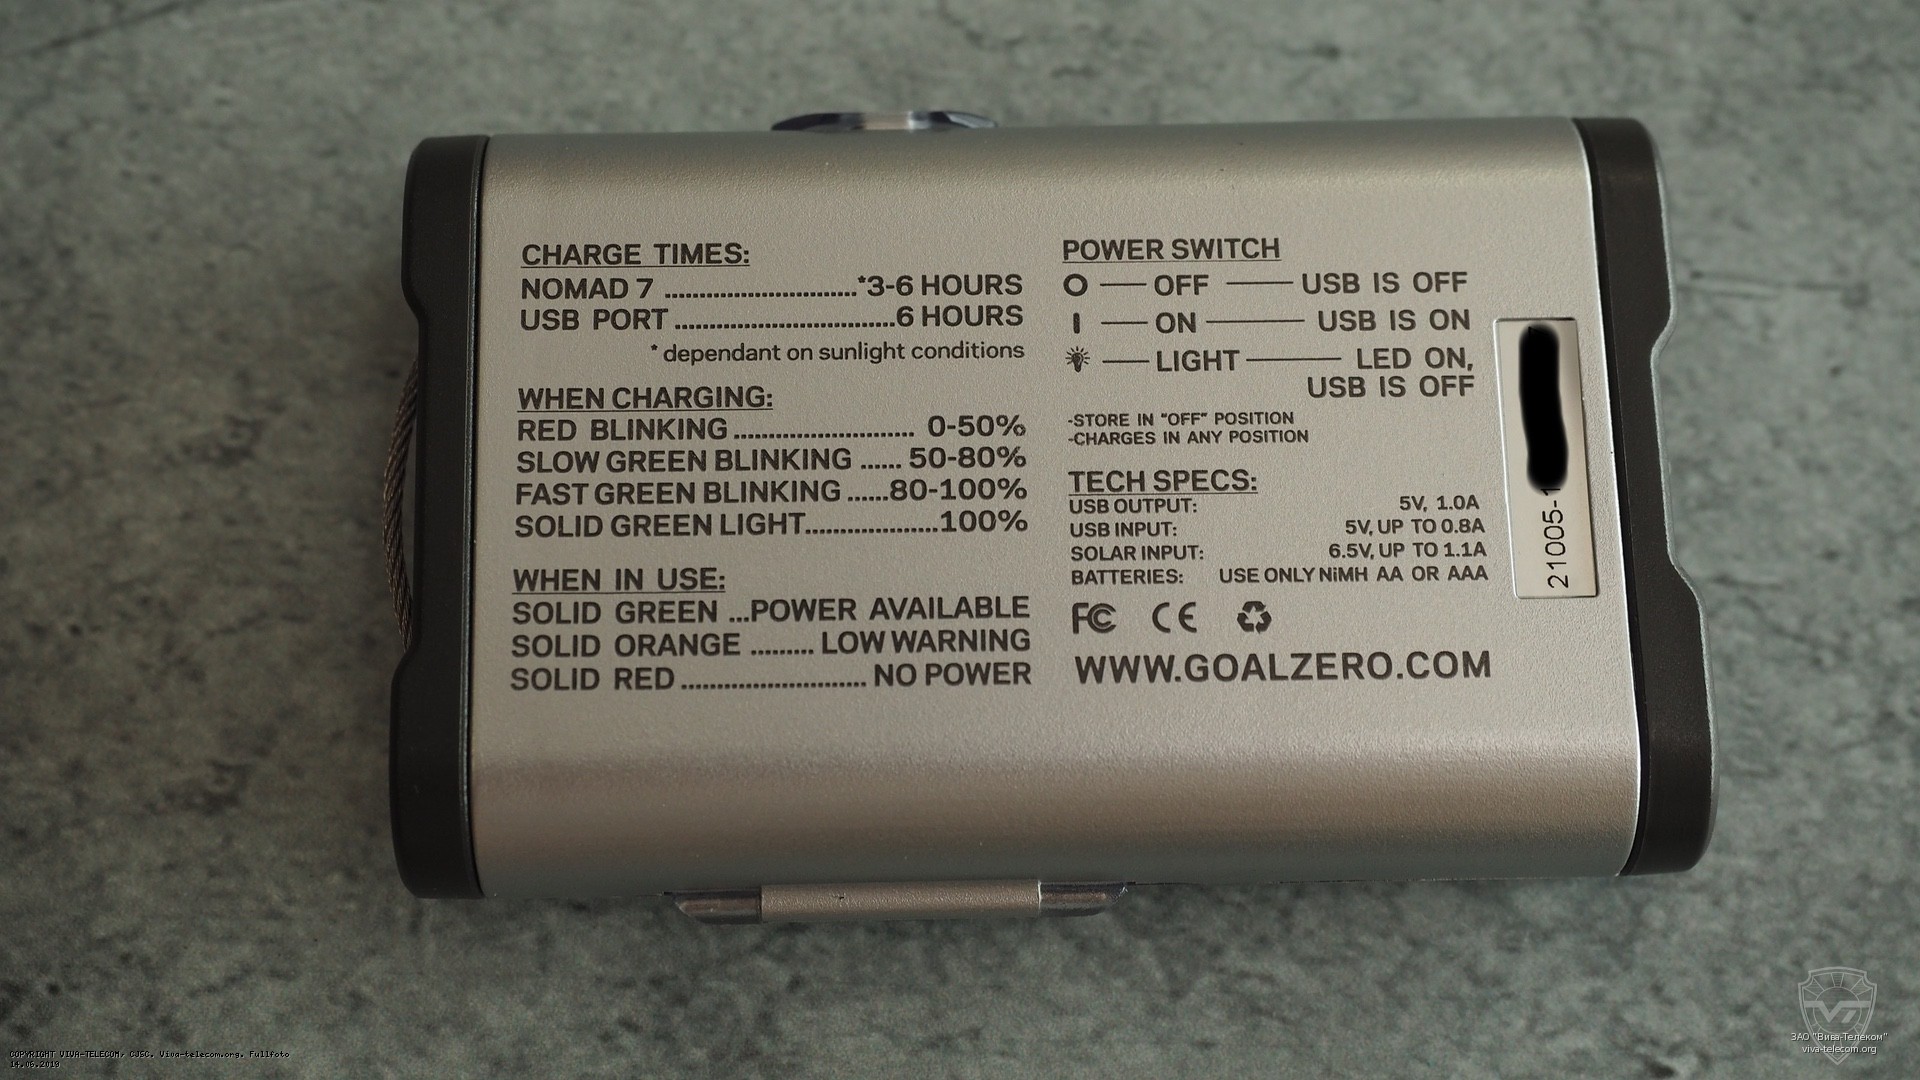   Goal Zero Guide 10 Plus Solar Kit